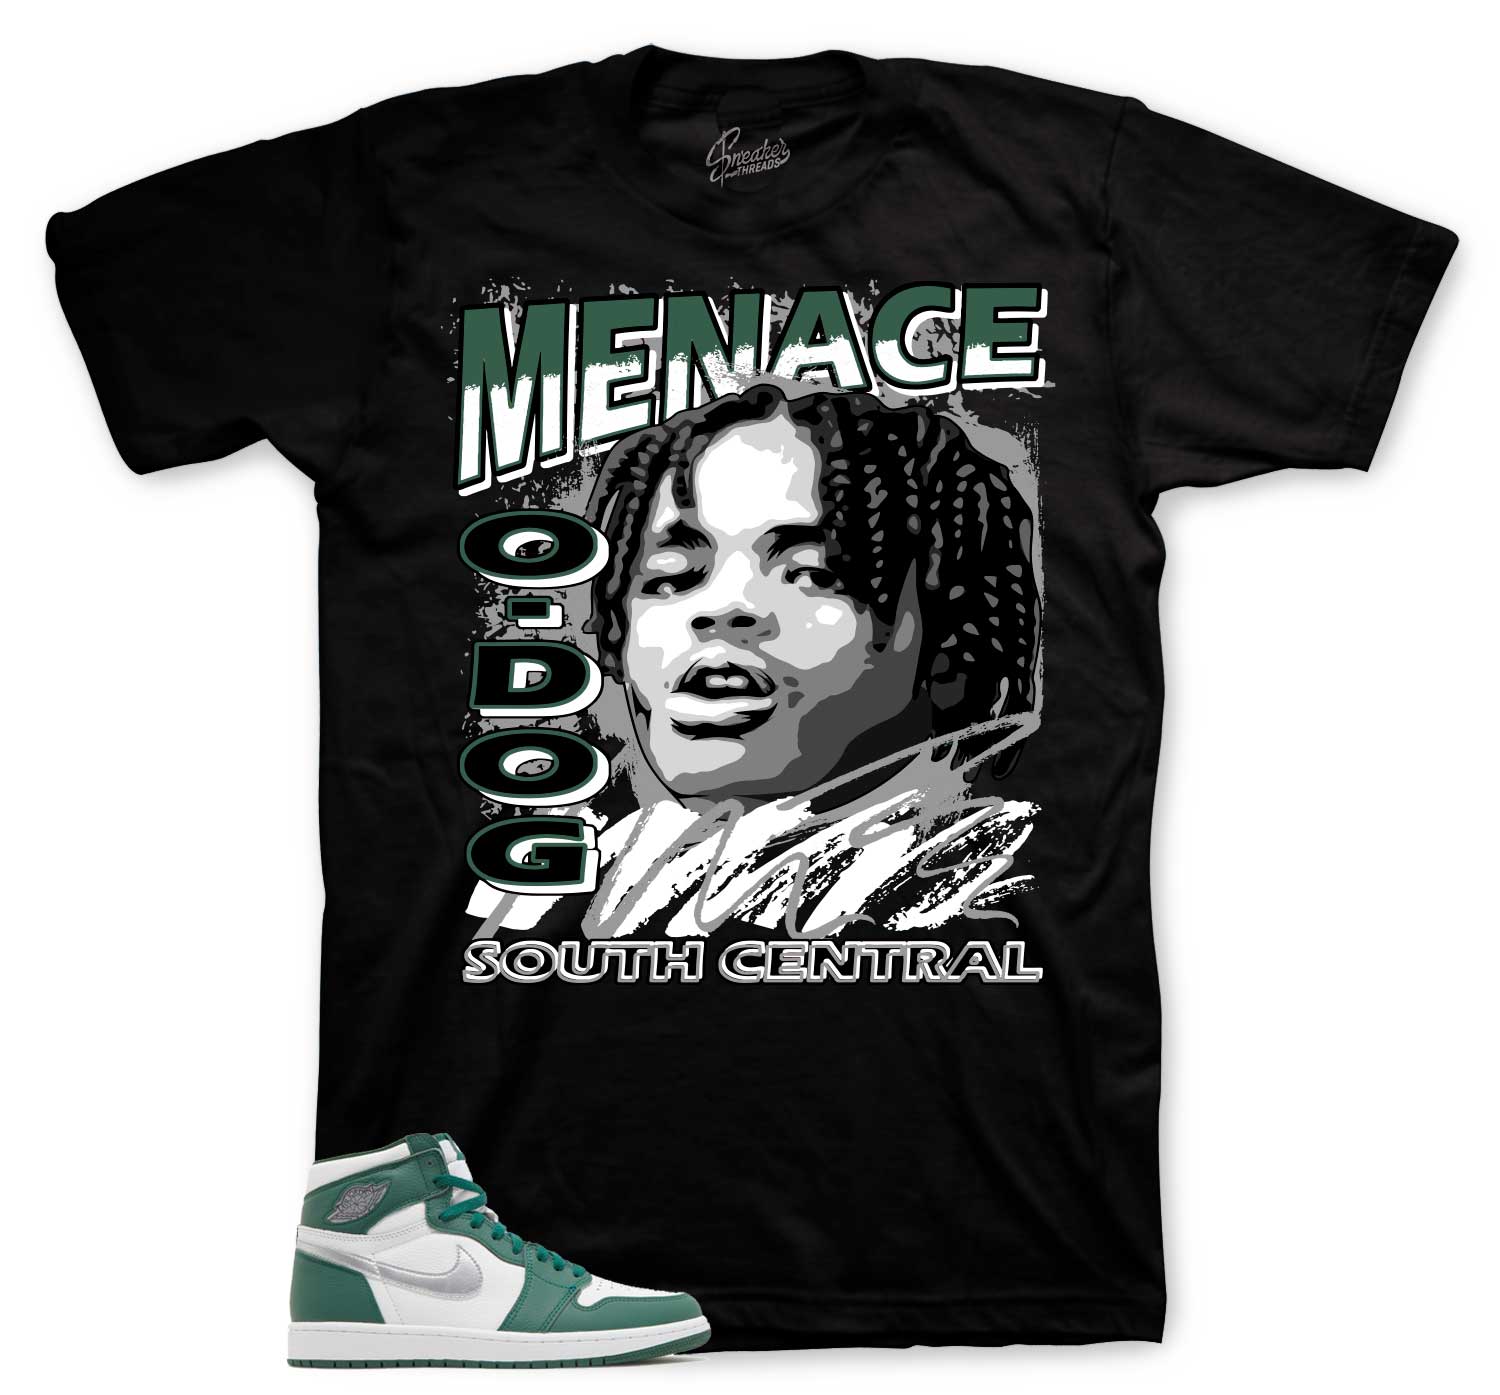 Retro 1 Gorge Green Shirt - Nineties - Black